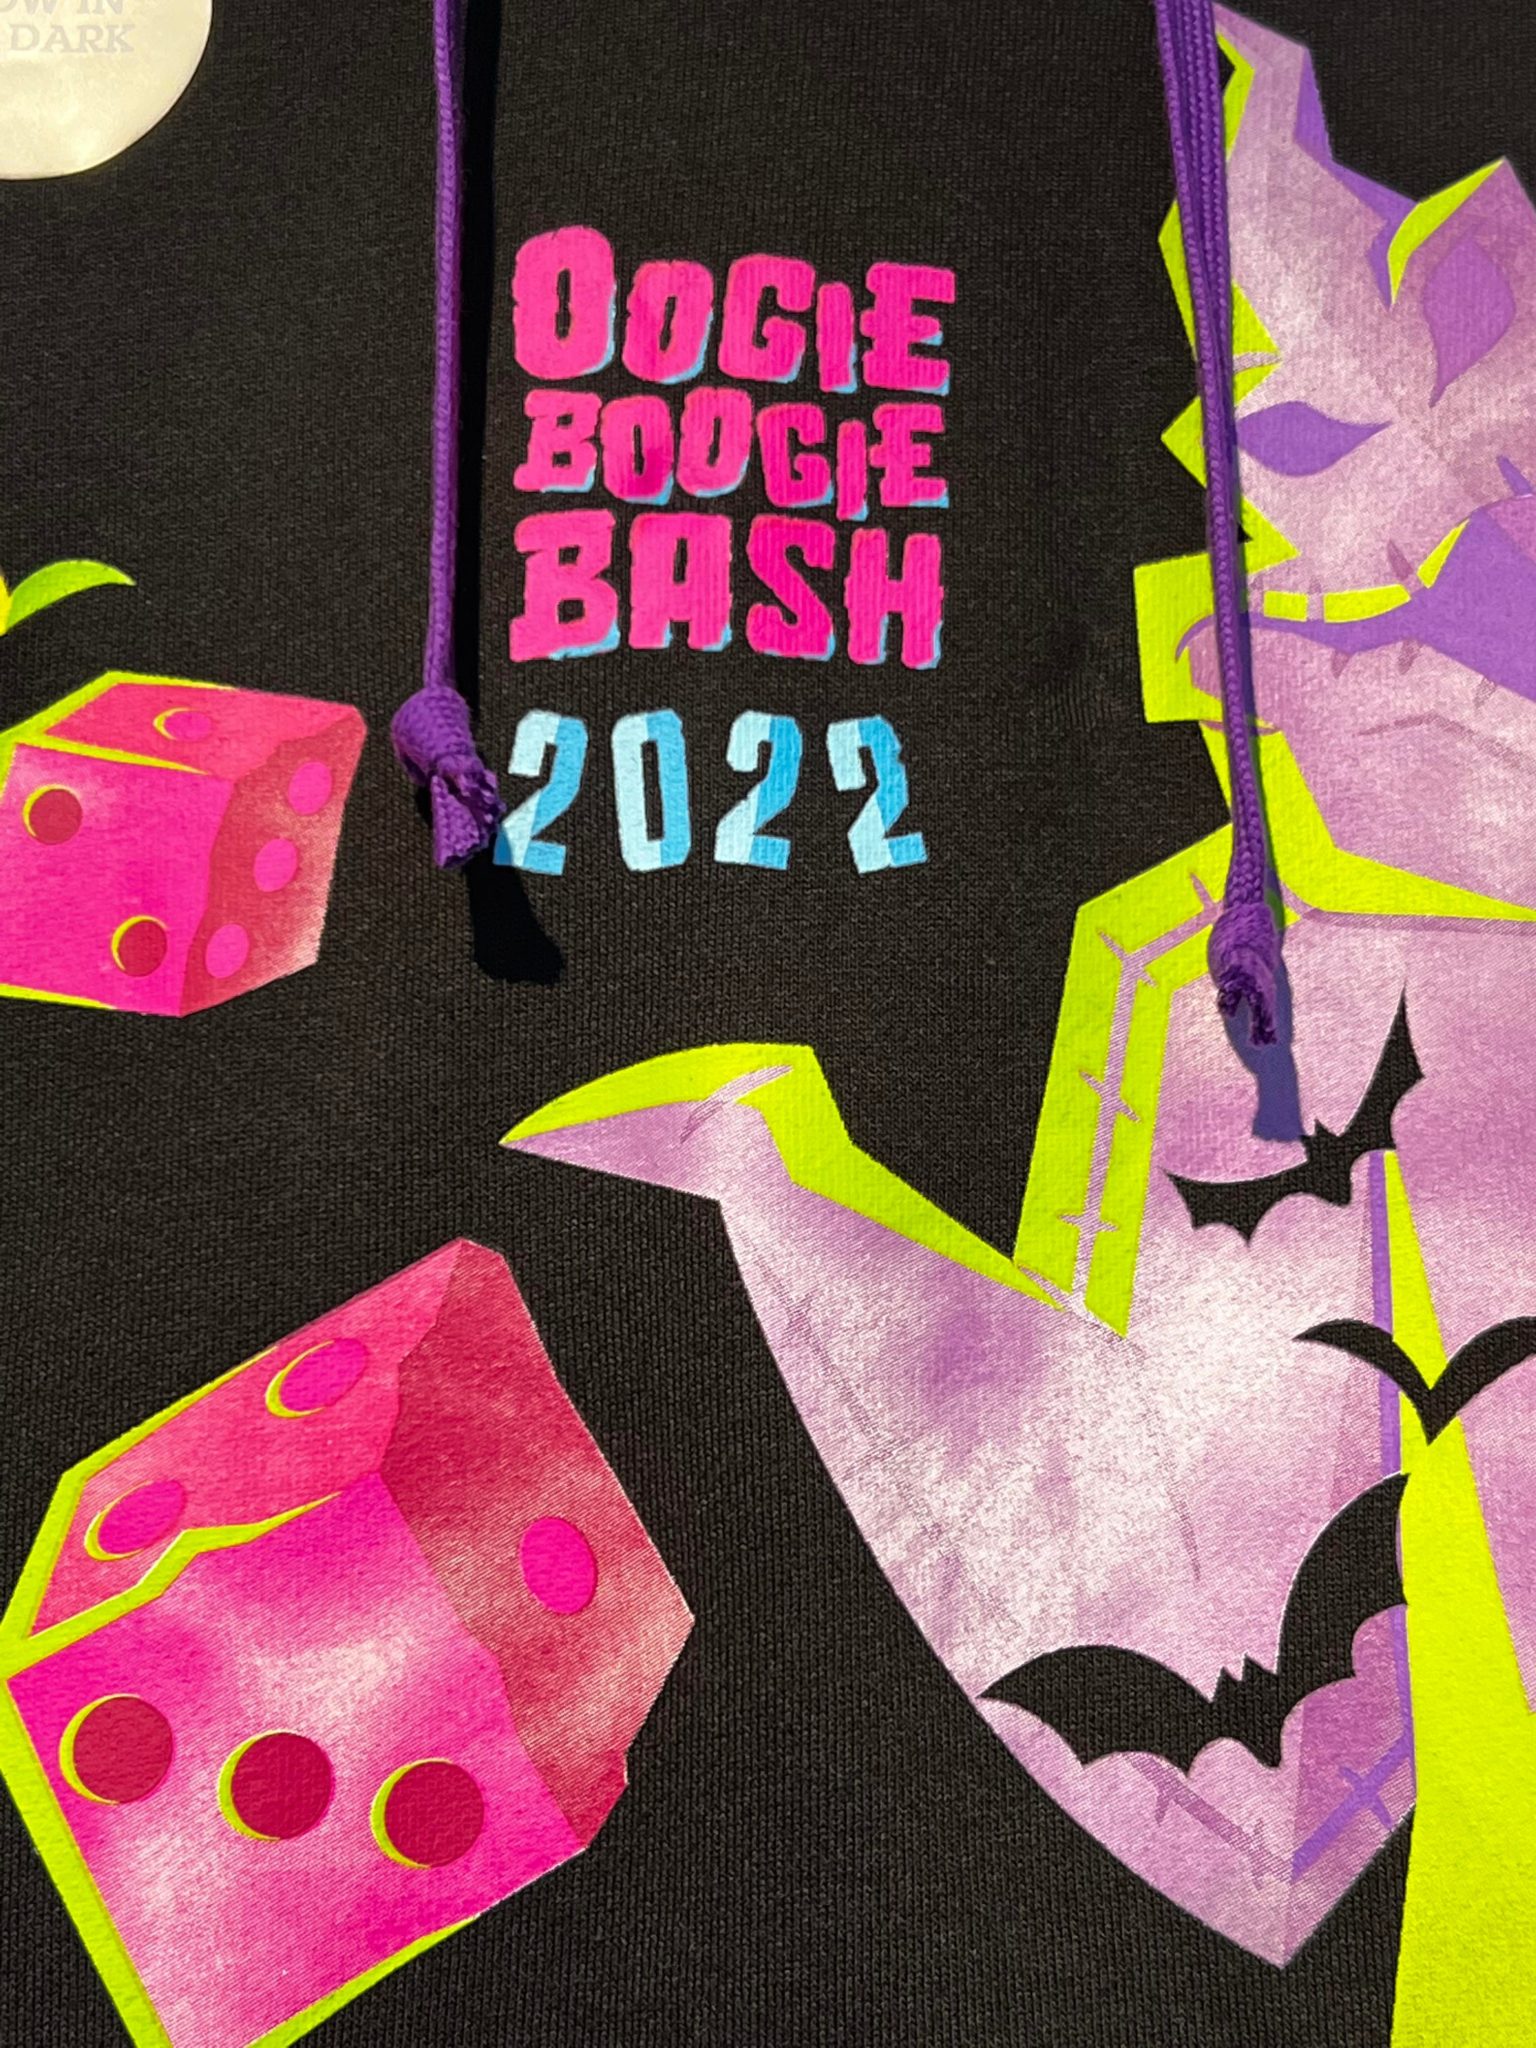 Exclusive Merchandise at Oogie Boogie Bash